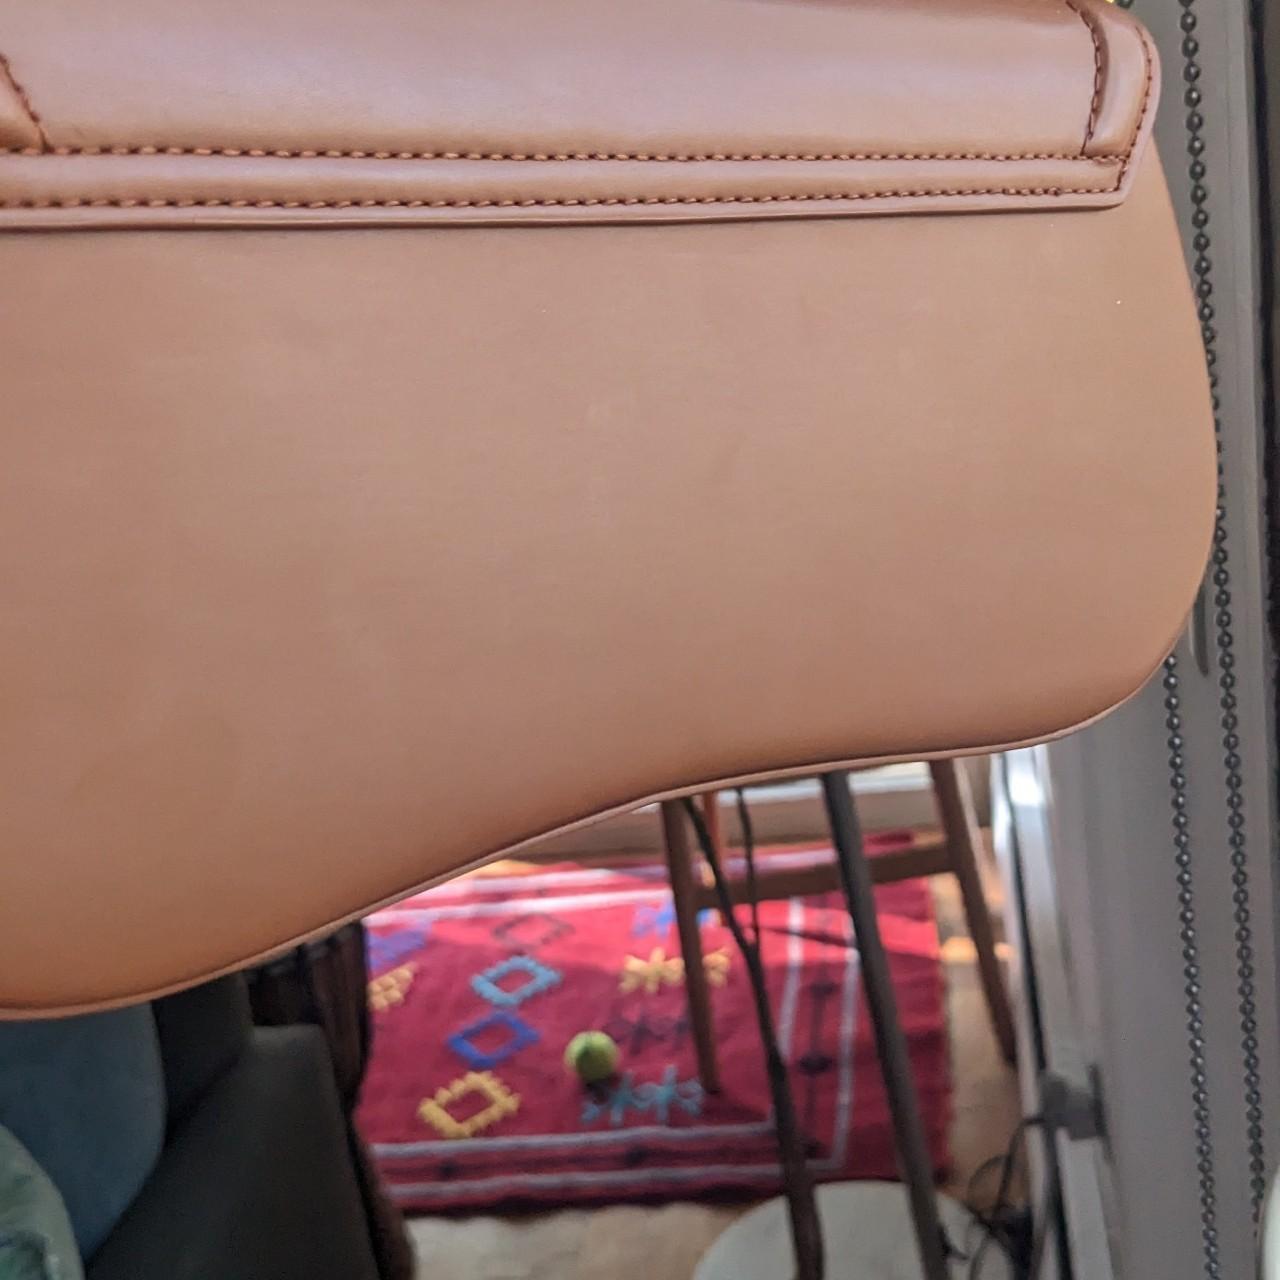 JW Pei Joy Faux Leather Shoulder Bag in Pink